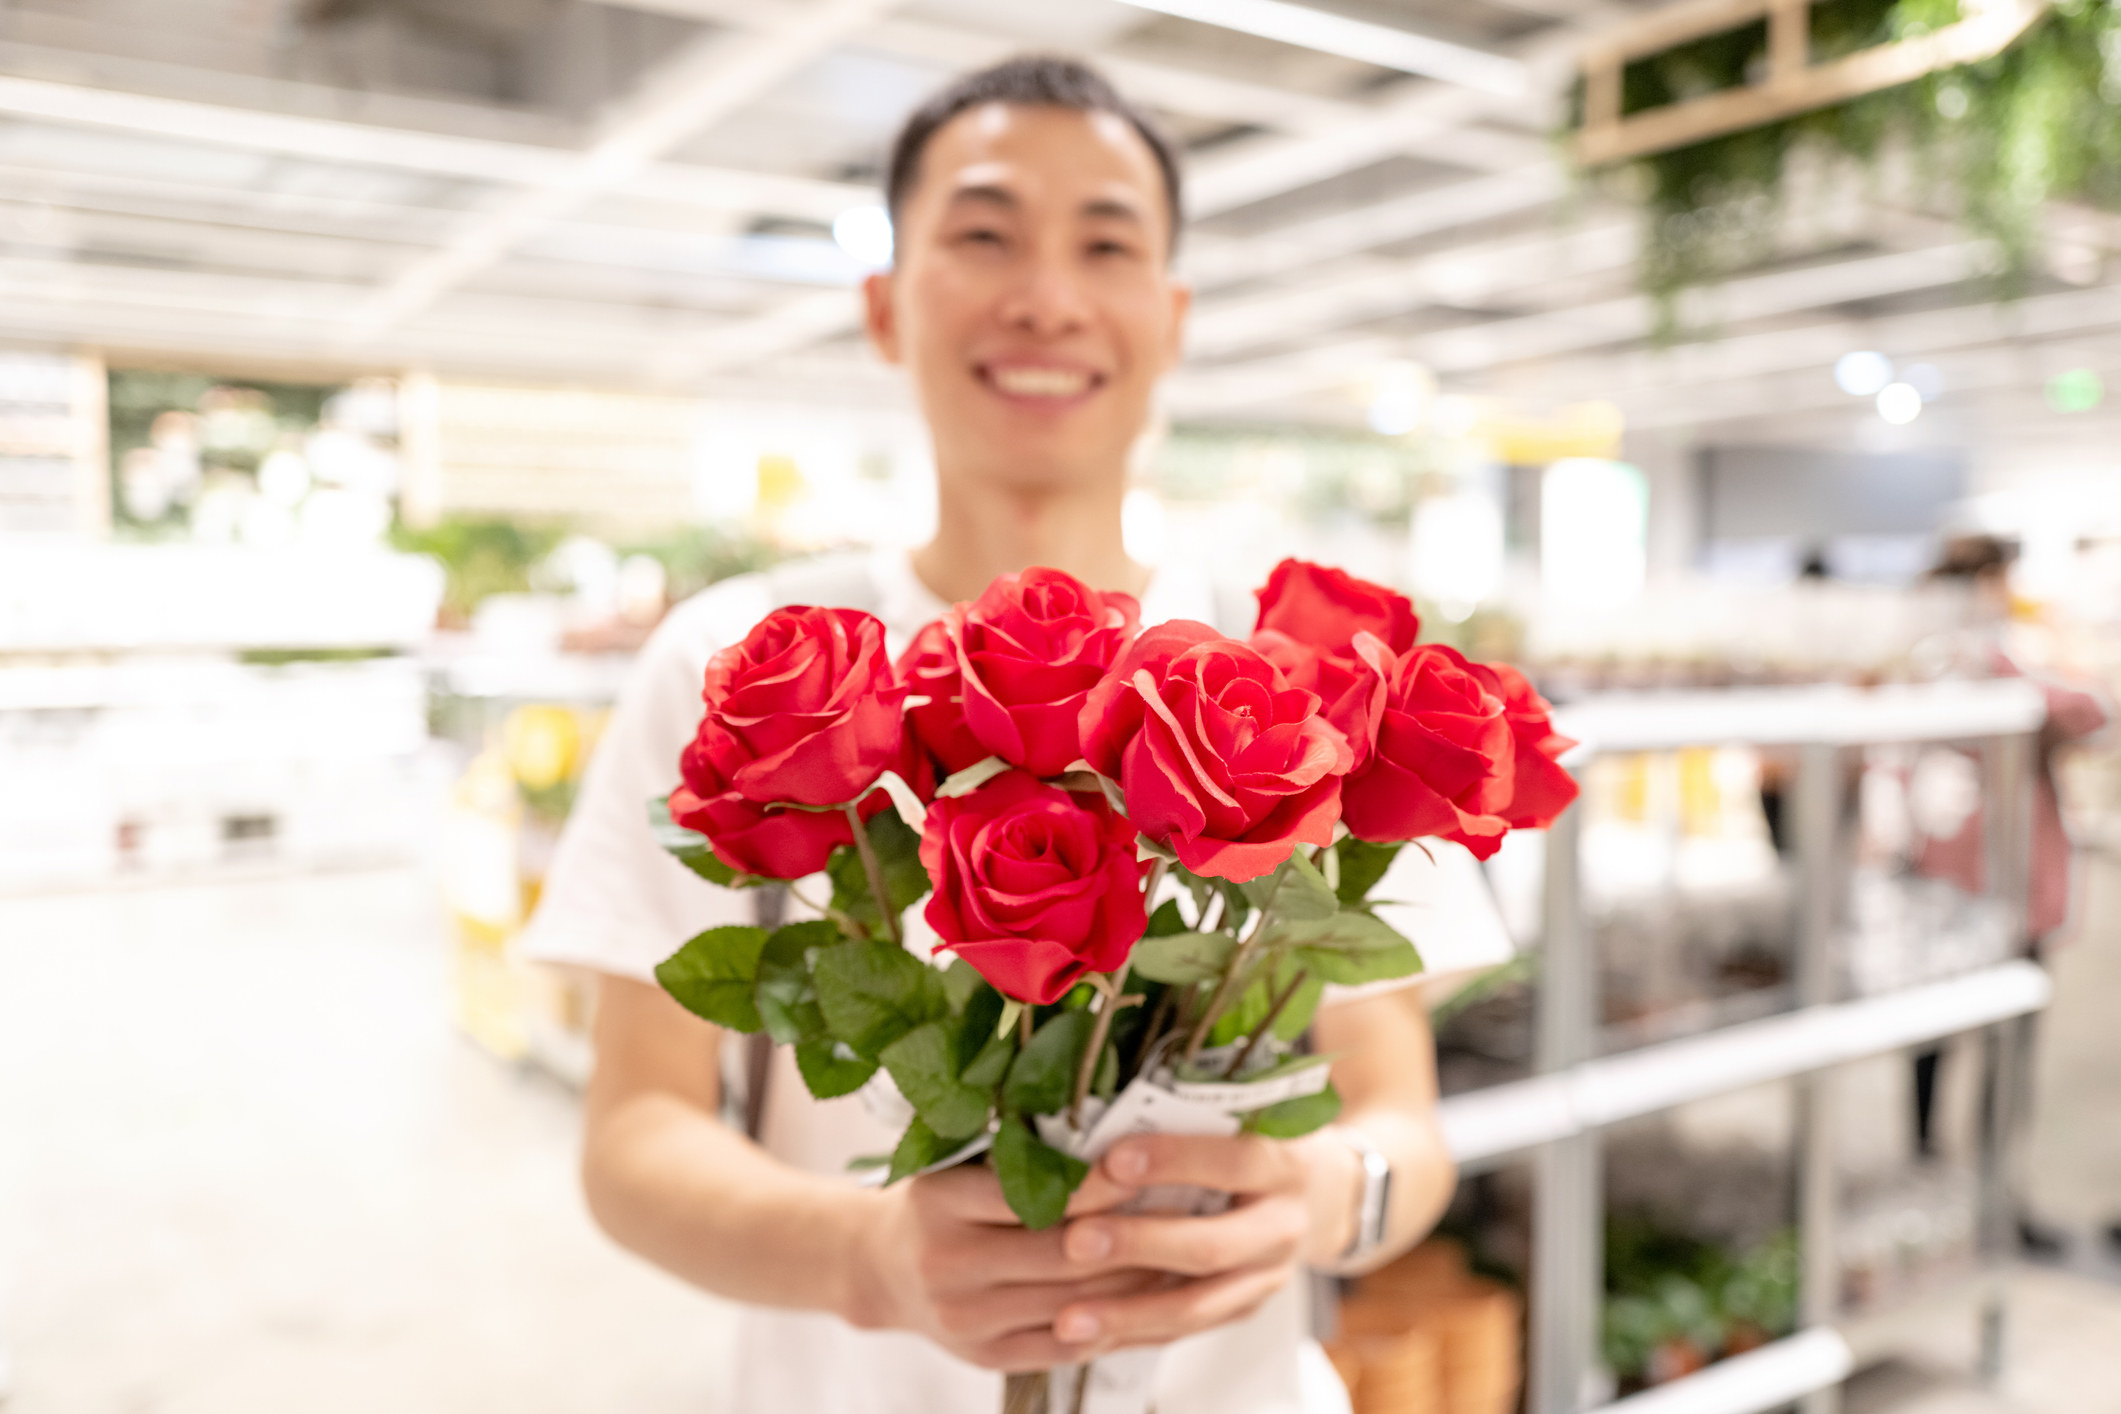 man holding roses